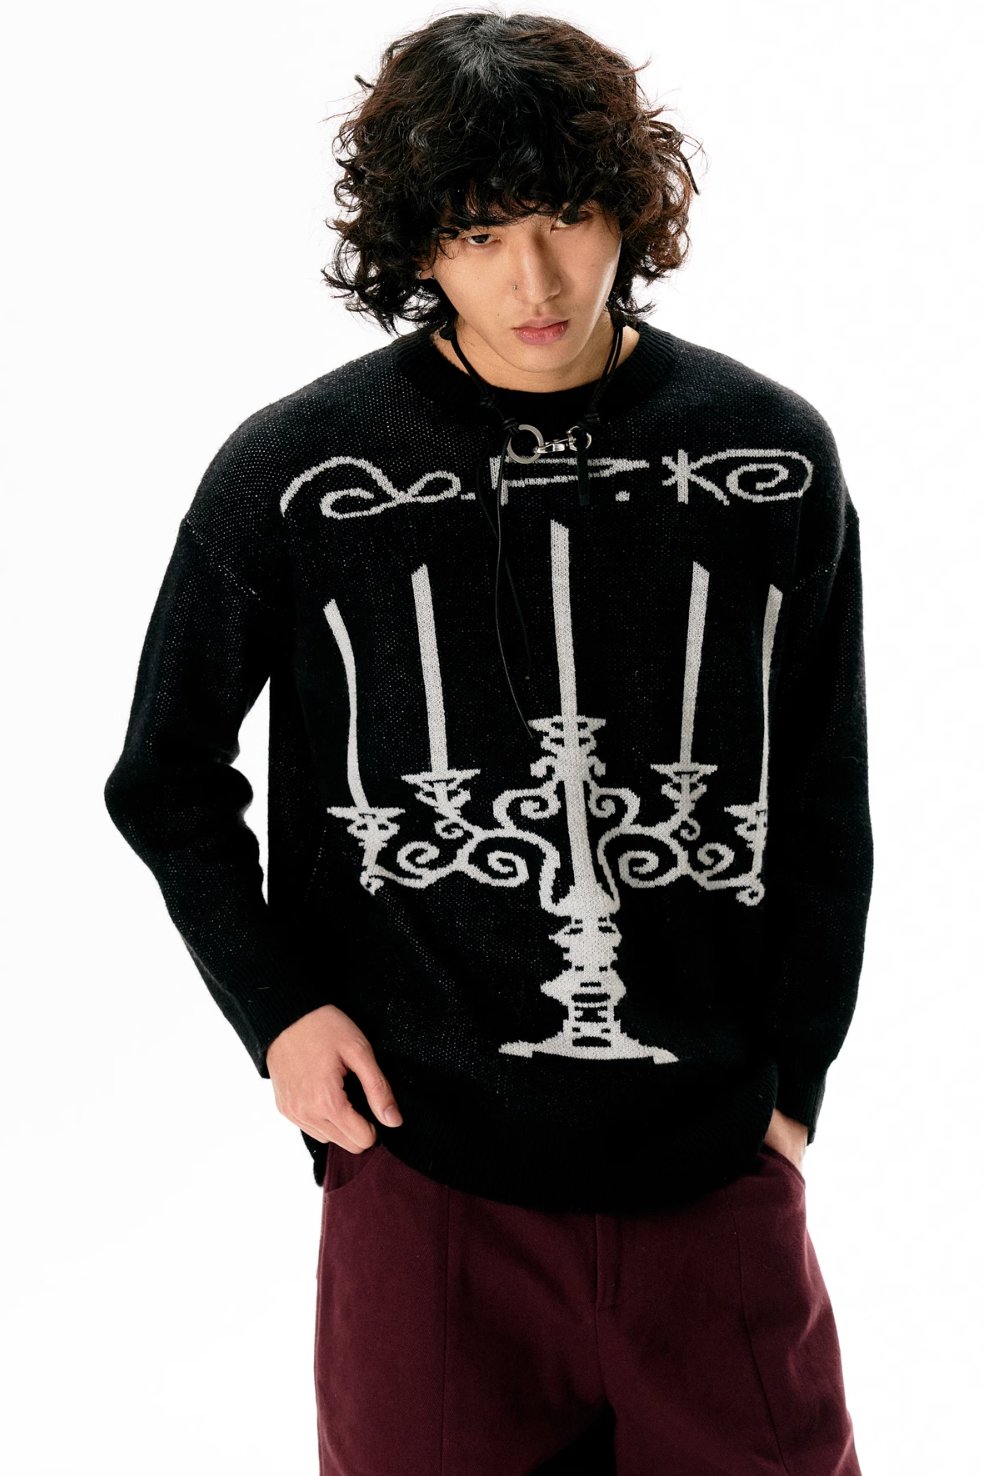 candlestick sweater APR0010